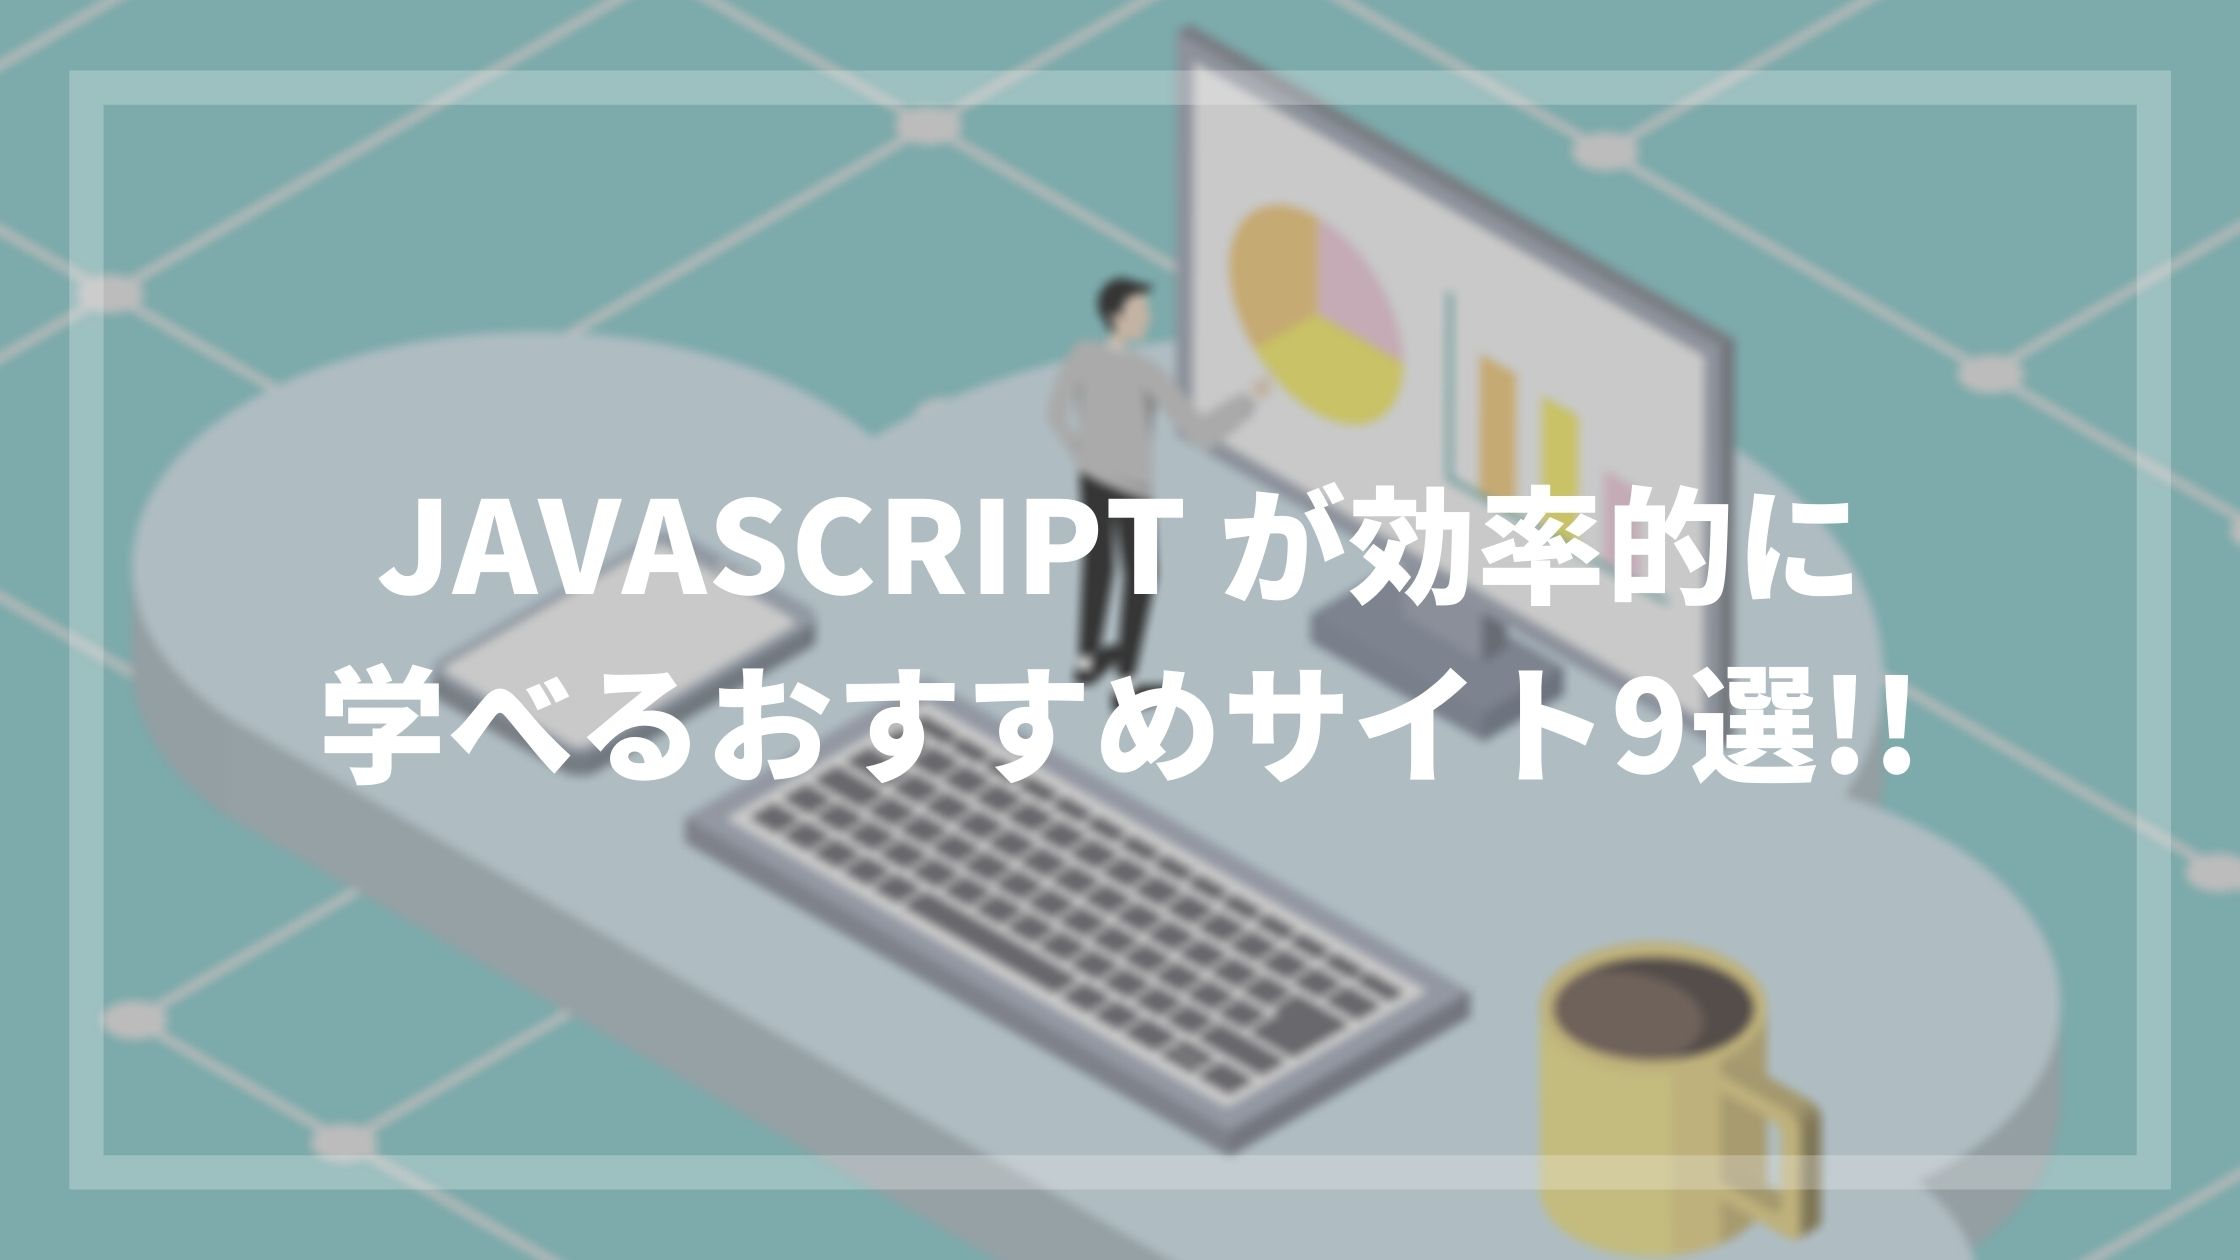 Javascript が効率的に学べるおすすめサイト9選 ウェブカツ公式blog